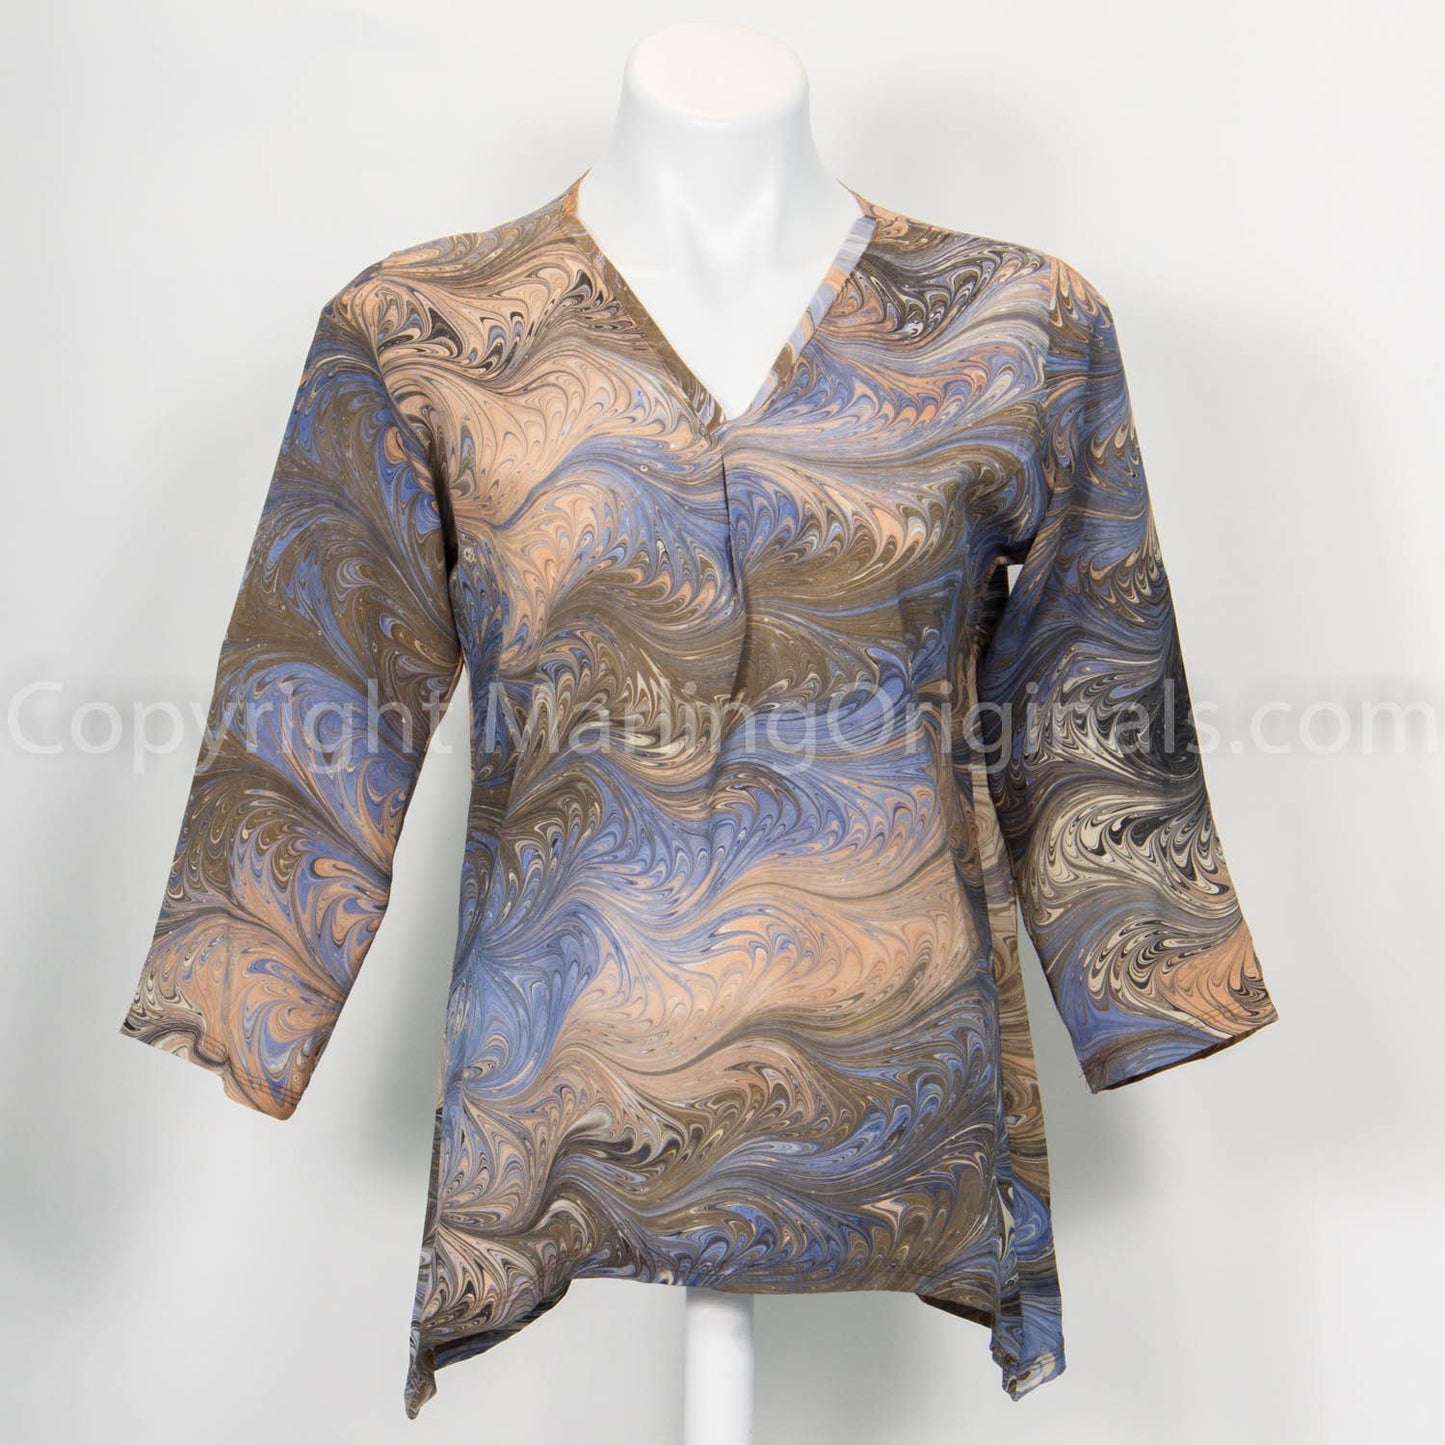 handmarbled silk tunic for women in brown, grey, black tones. V neck. Long sleeves